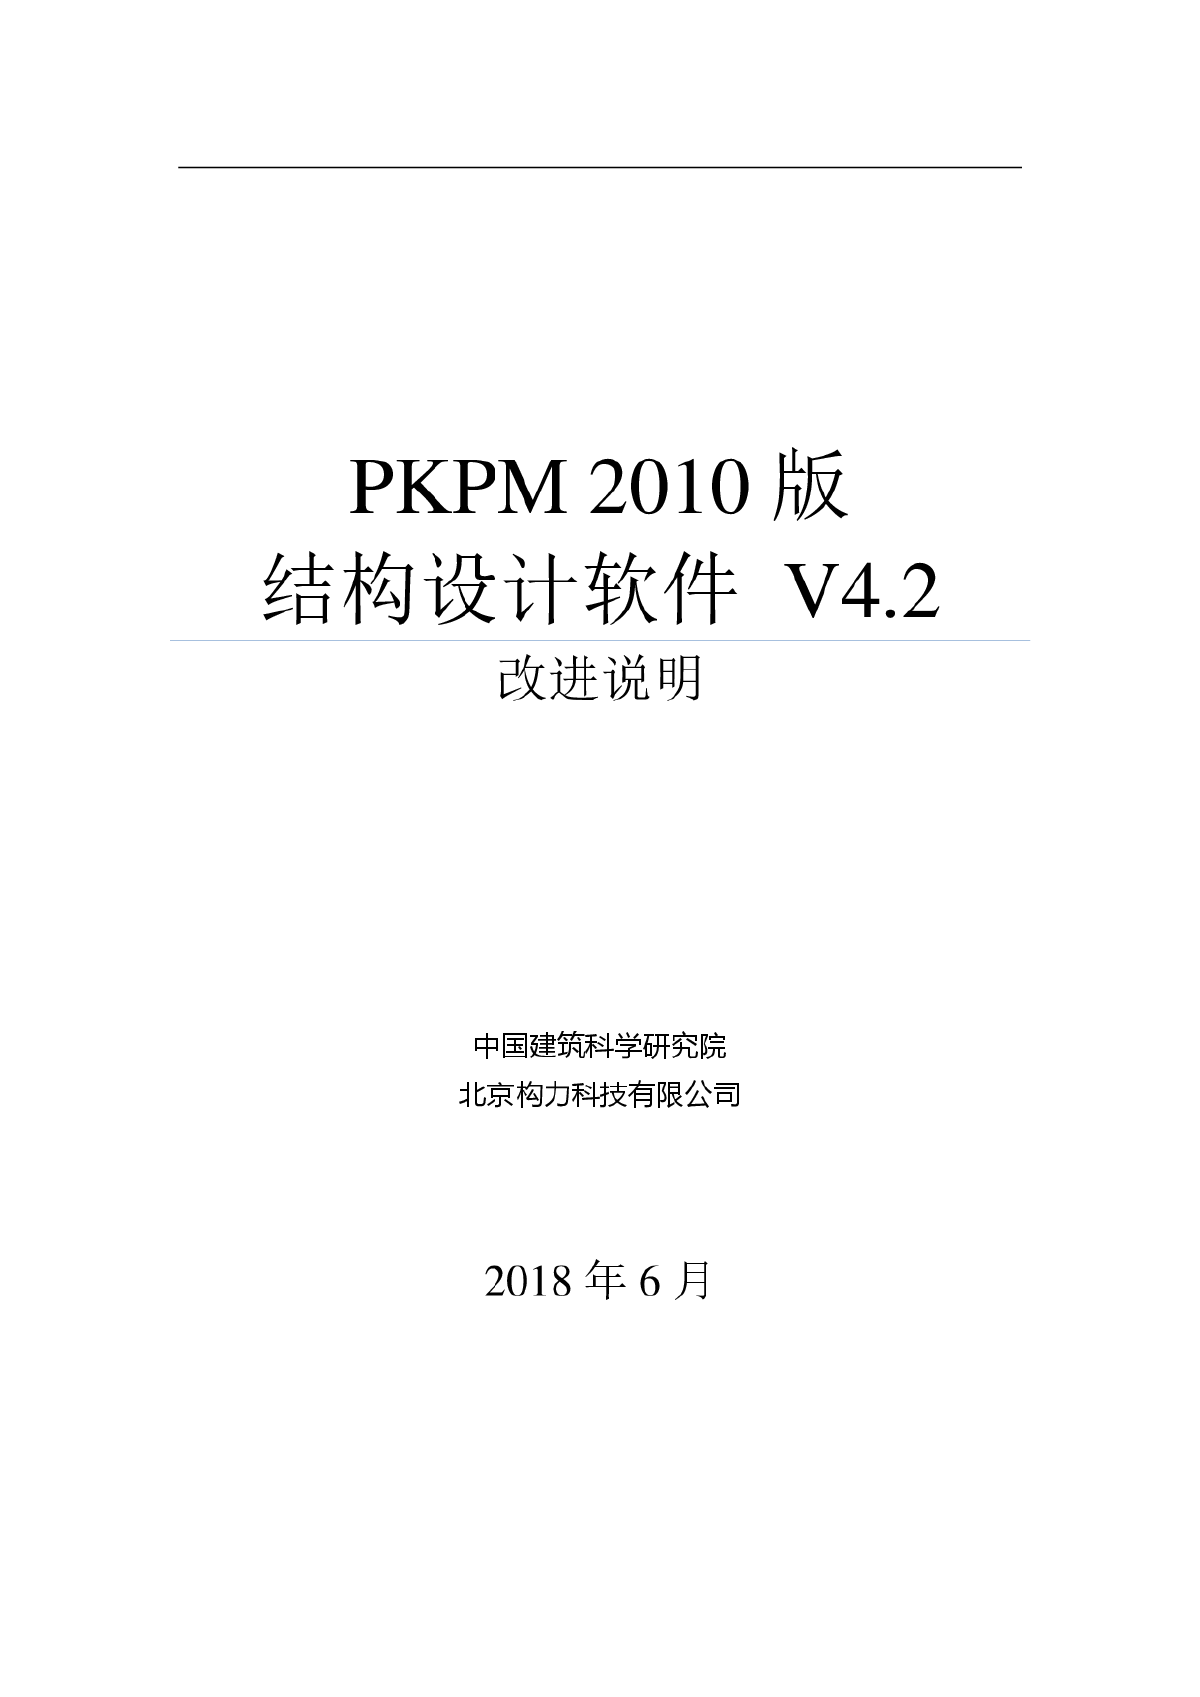 PKPM V4.2改进说明-图一